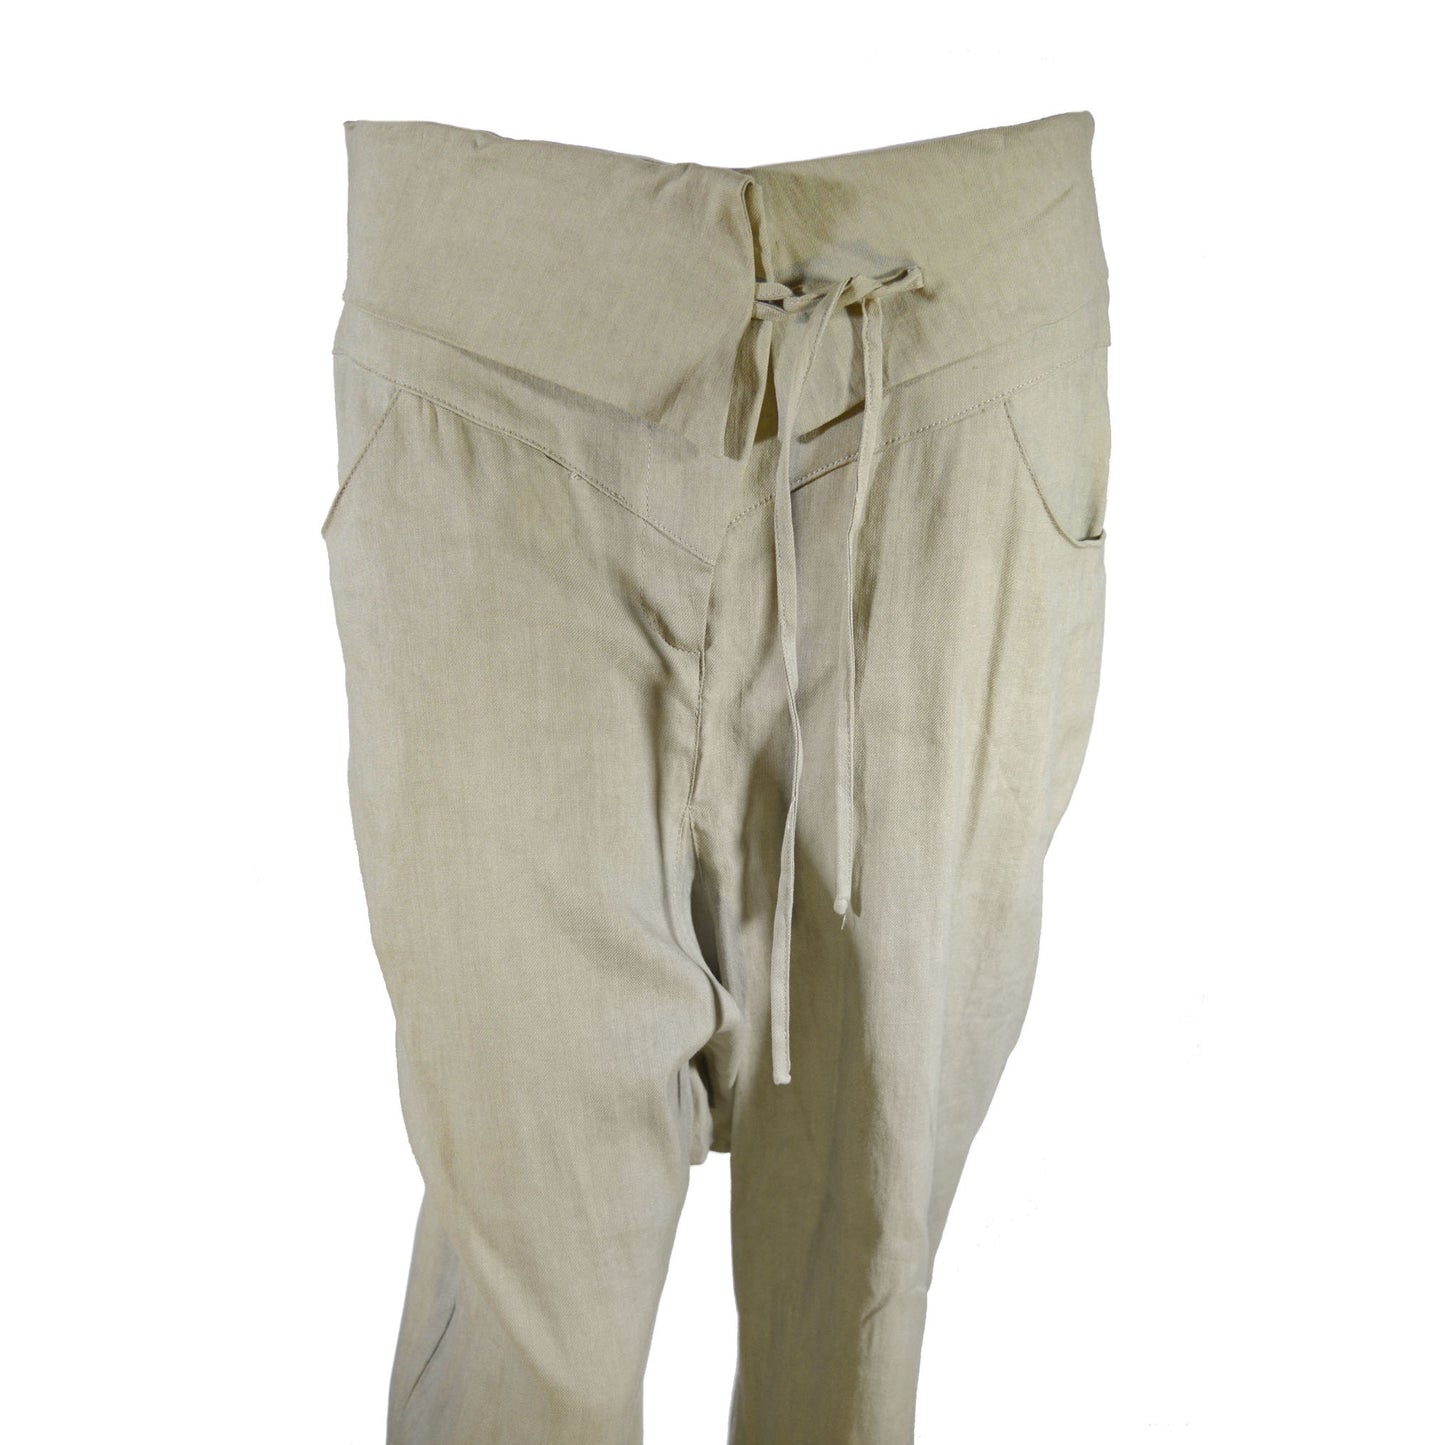 Drop crotch trousers